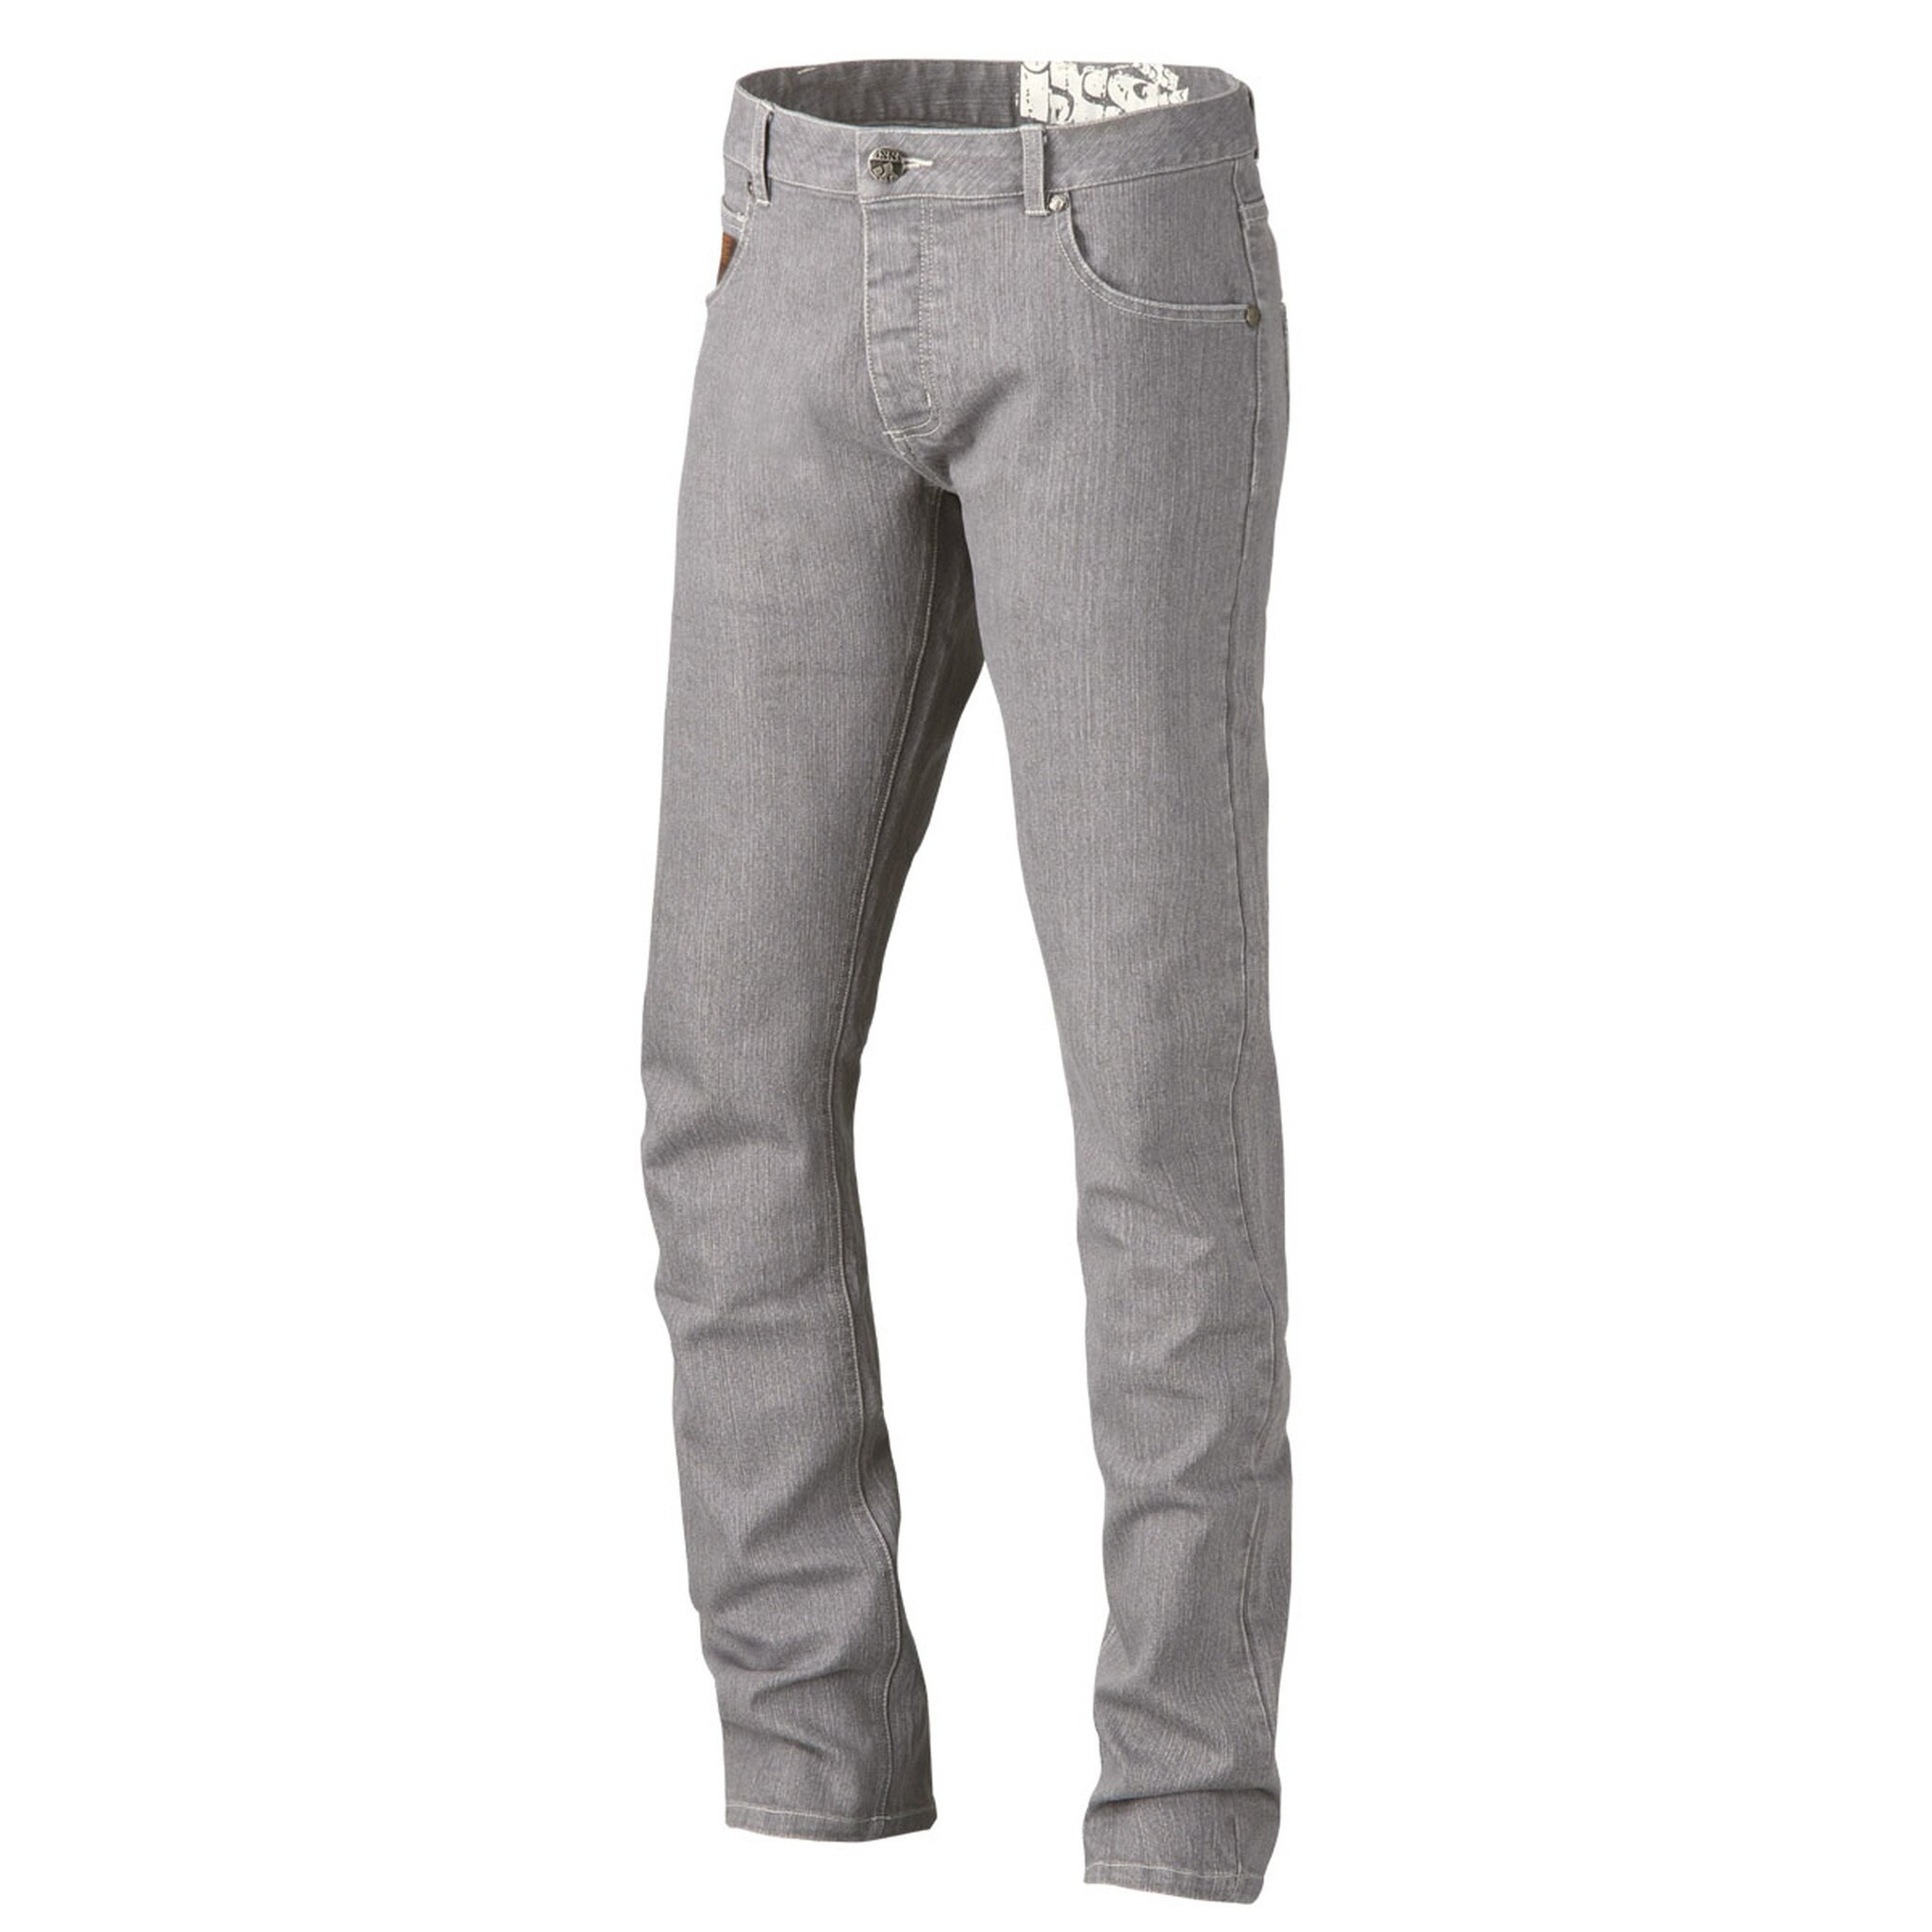 IXS Men's Pant Modest Denim Grey Size 36 (473-510-4450-009-36)